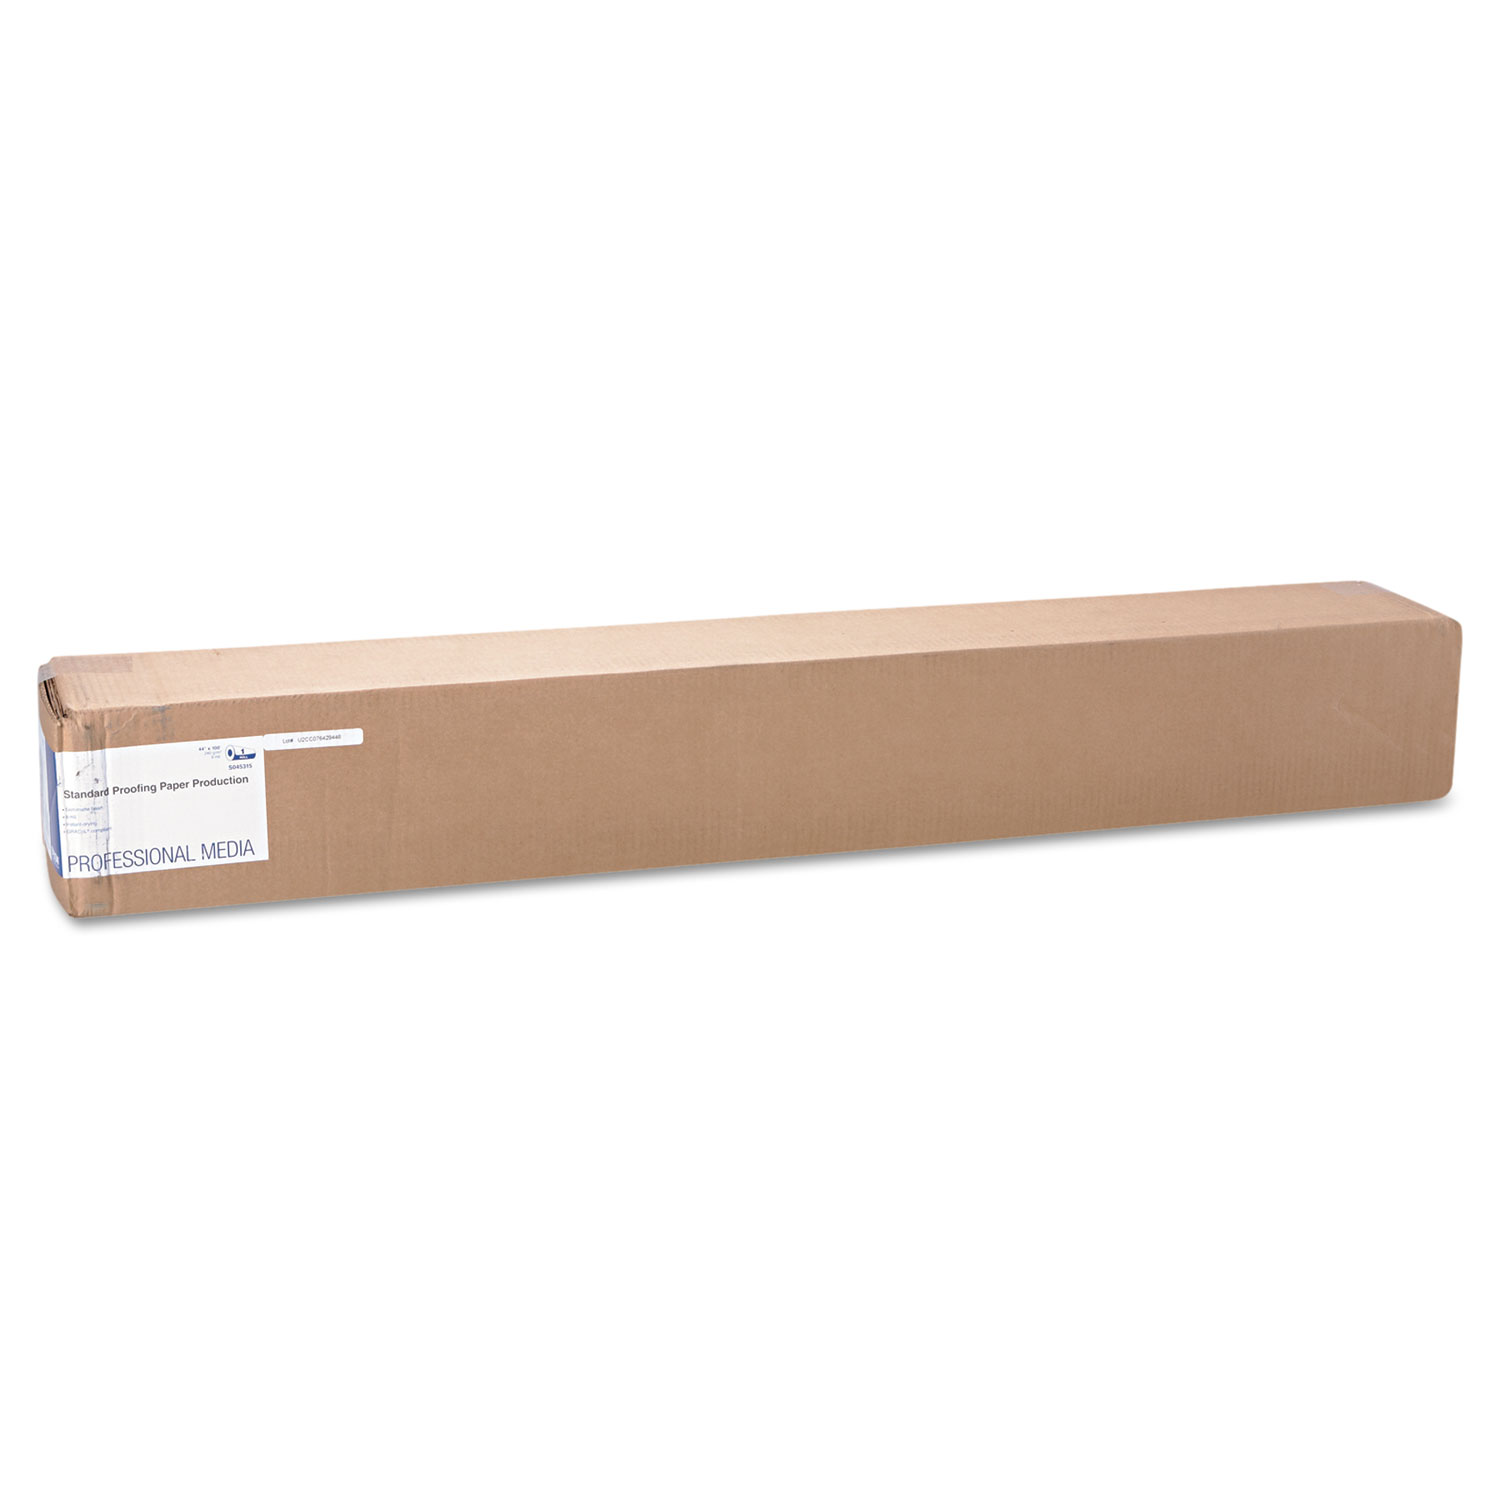  Epson S045315 Standard Proofing Paper Production, 9 mil, 44 x 100 ft, Semi-Matte White (EPSS045315) 